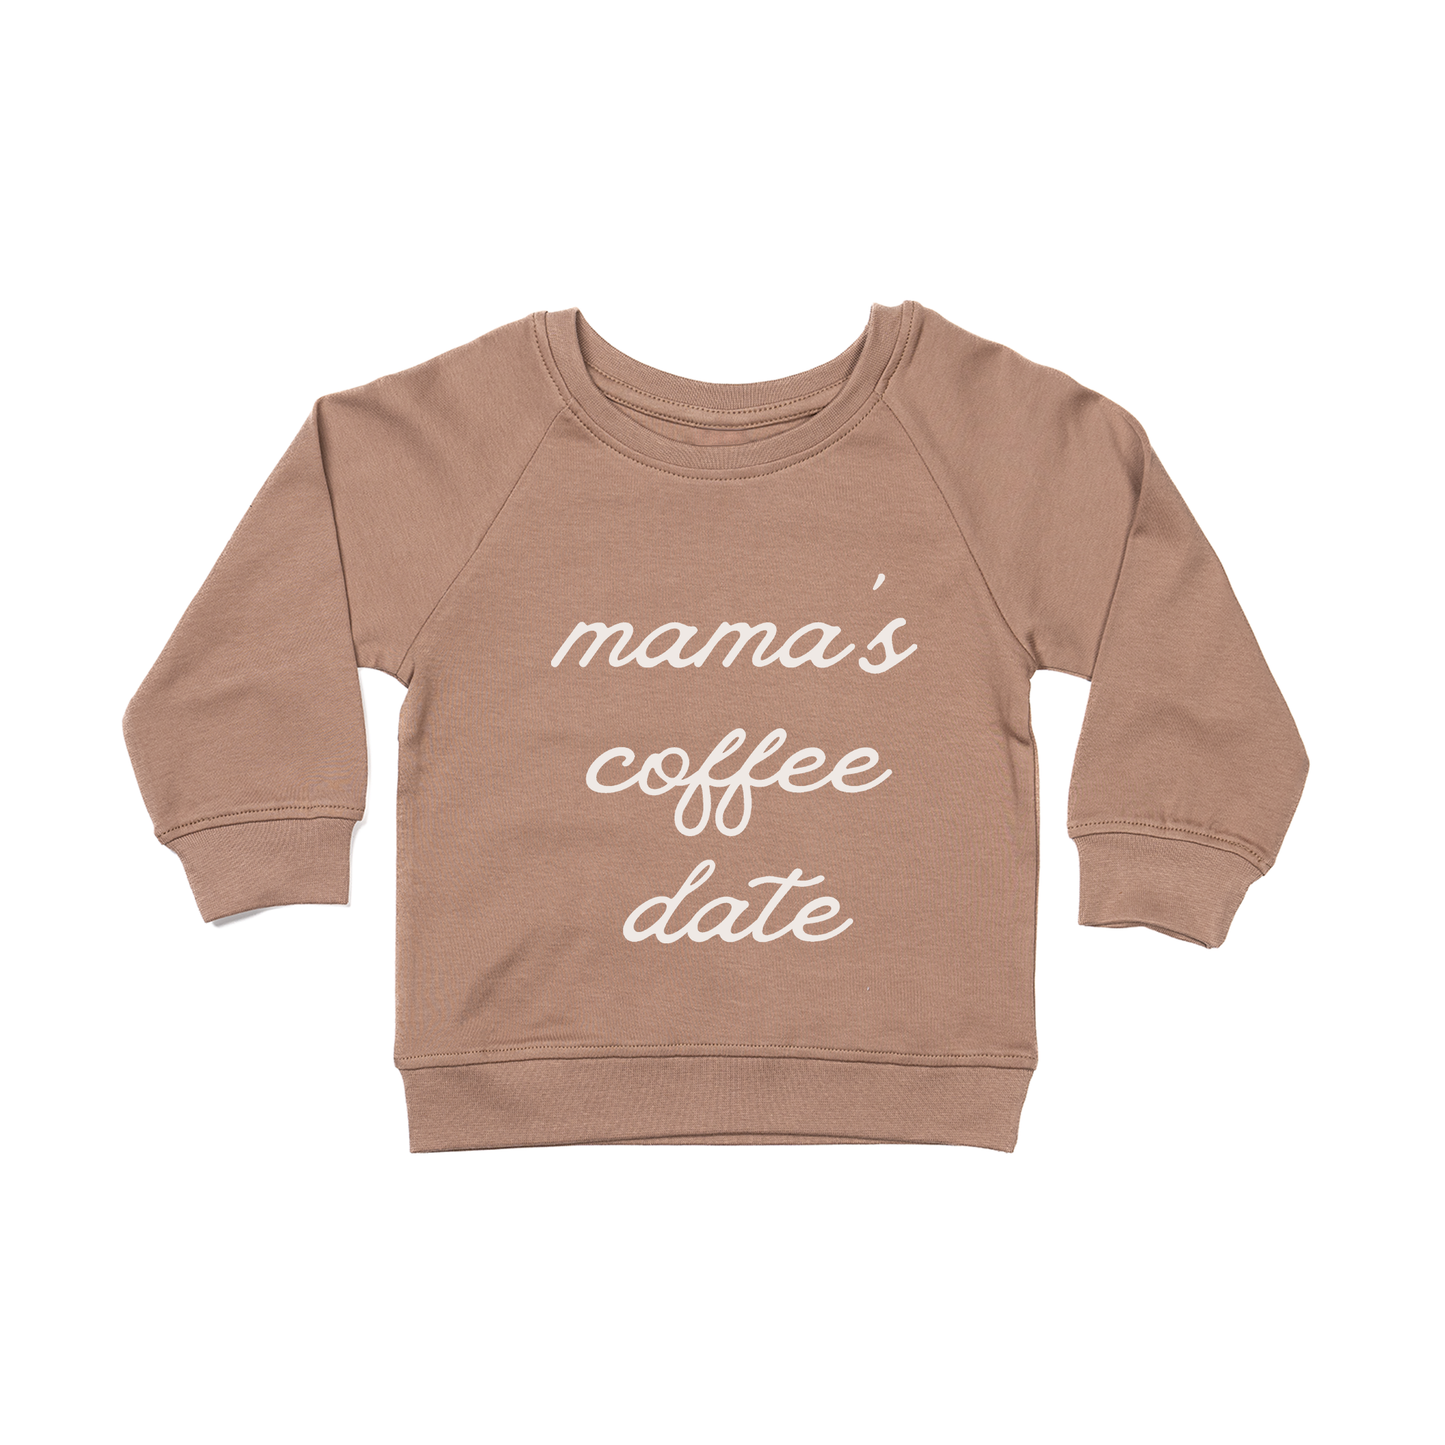 Mama's Coffee Date - Kids Sweatshirt (Toffee)